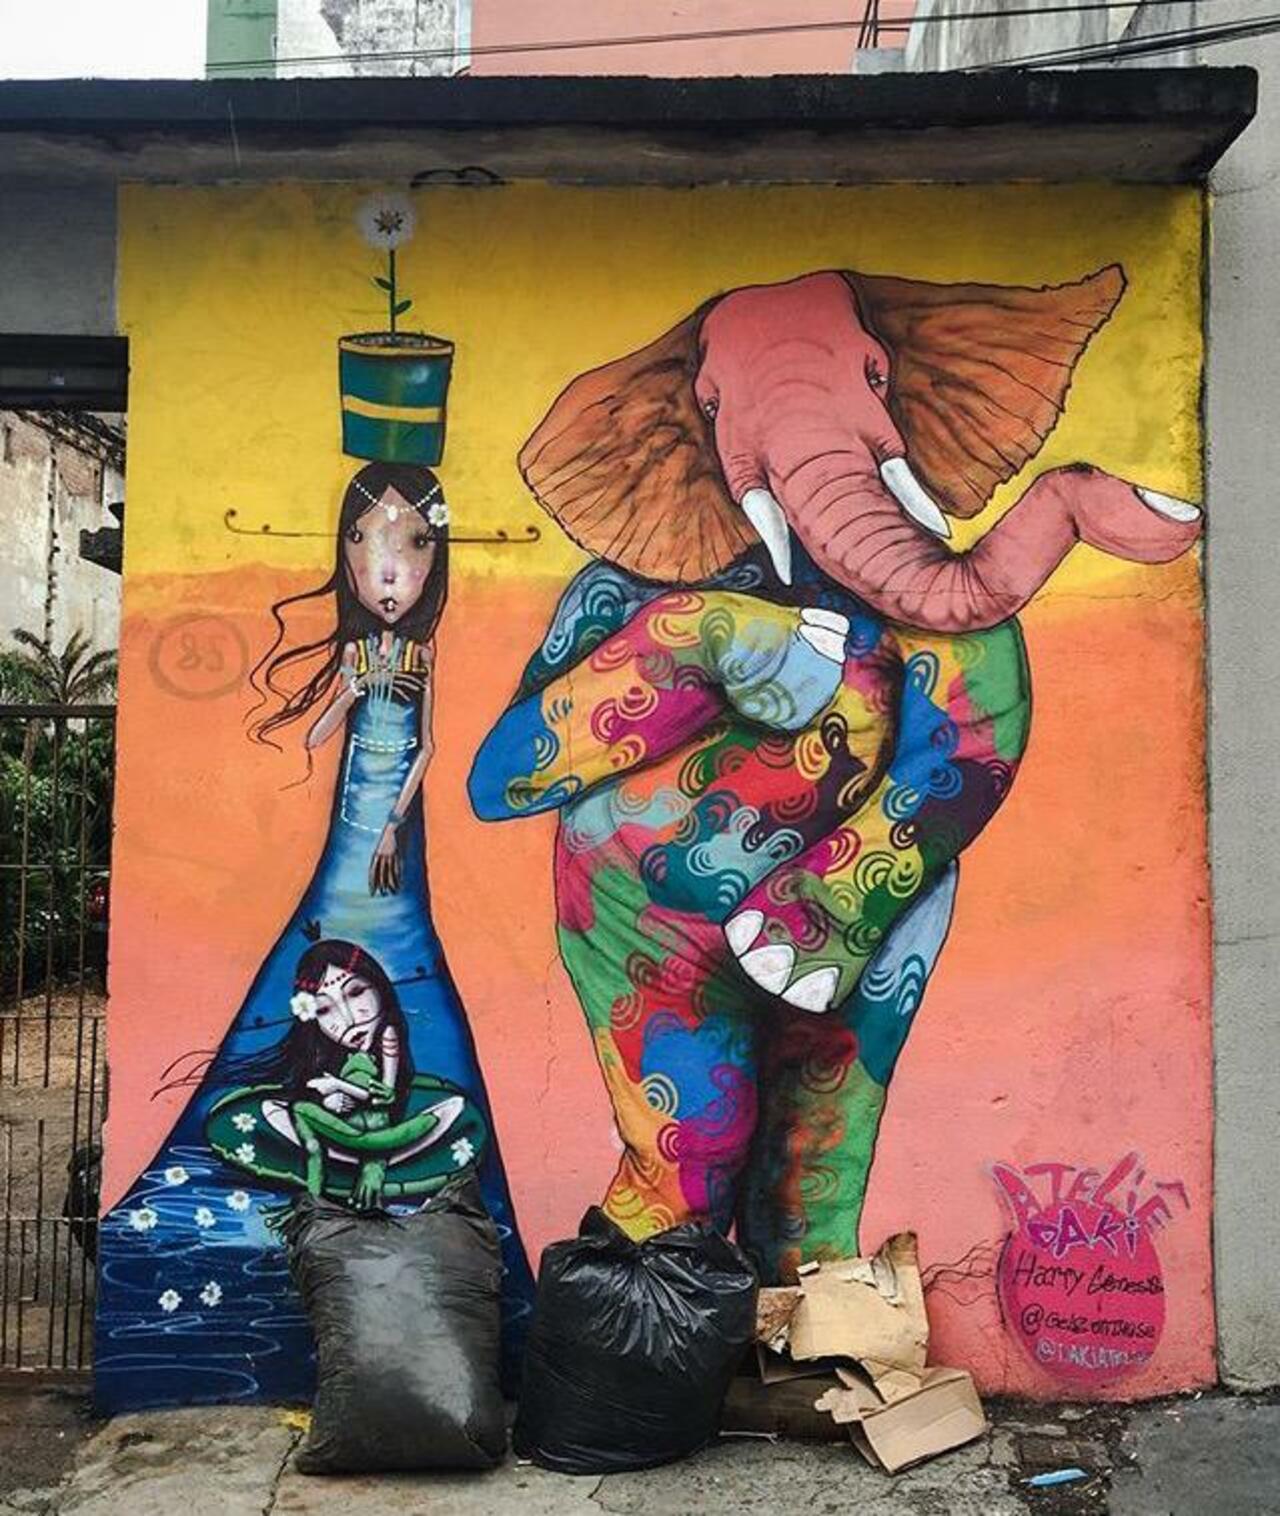 Street Art by Harry Geneis & Gelson in São Paulo 

#art #mural #graffiti #streetart http://t.co/yOKdcA9MCG